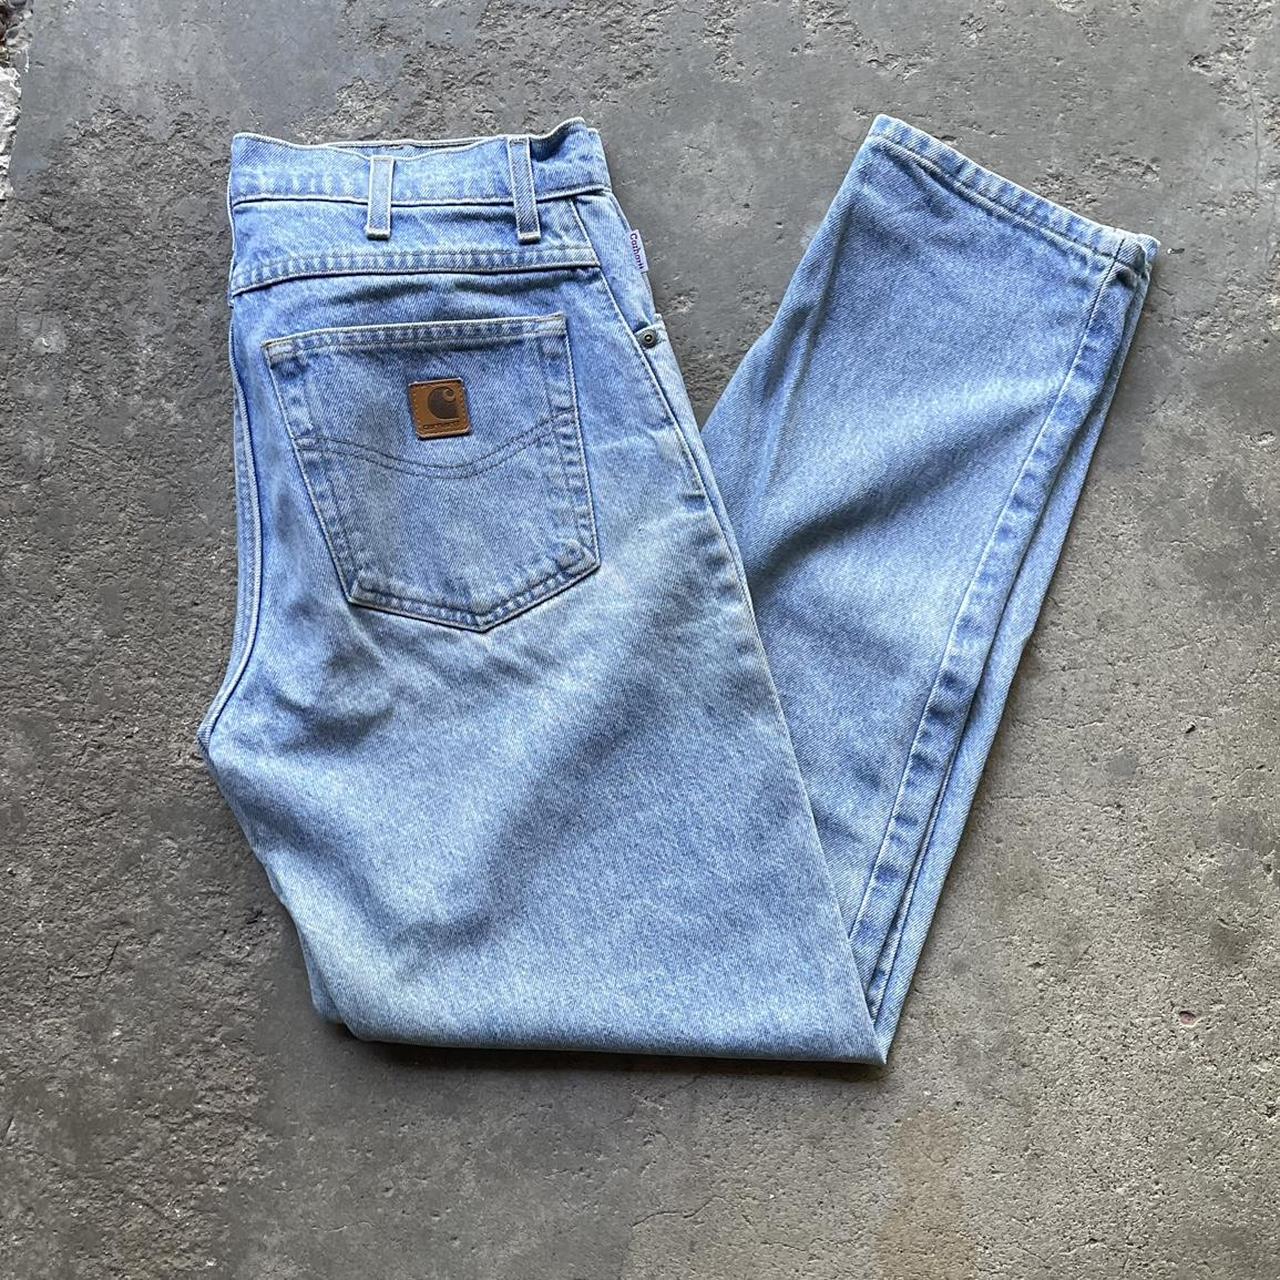 Vintage Carhartt Jeans 33x32 super nice wash and... - Depop